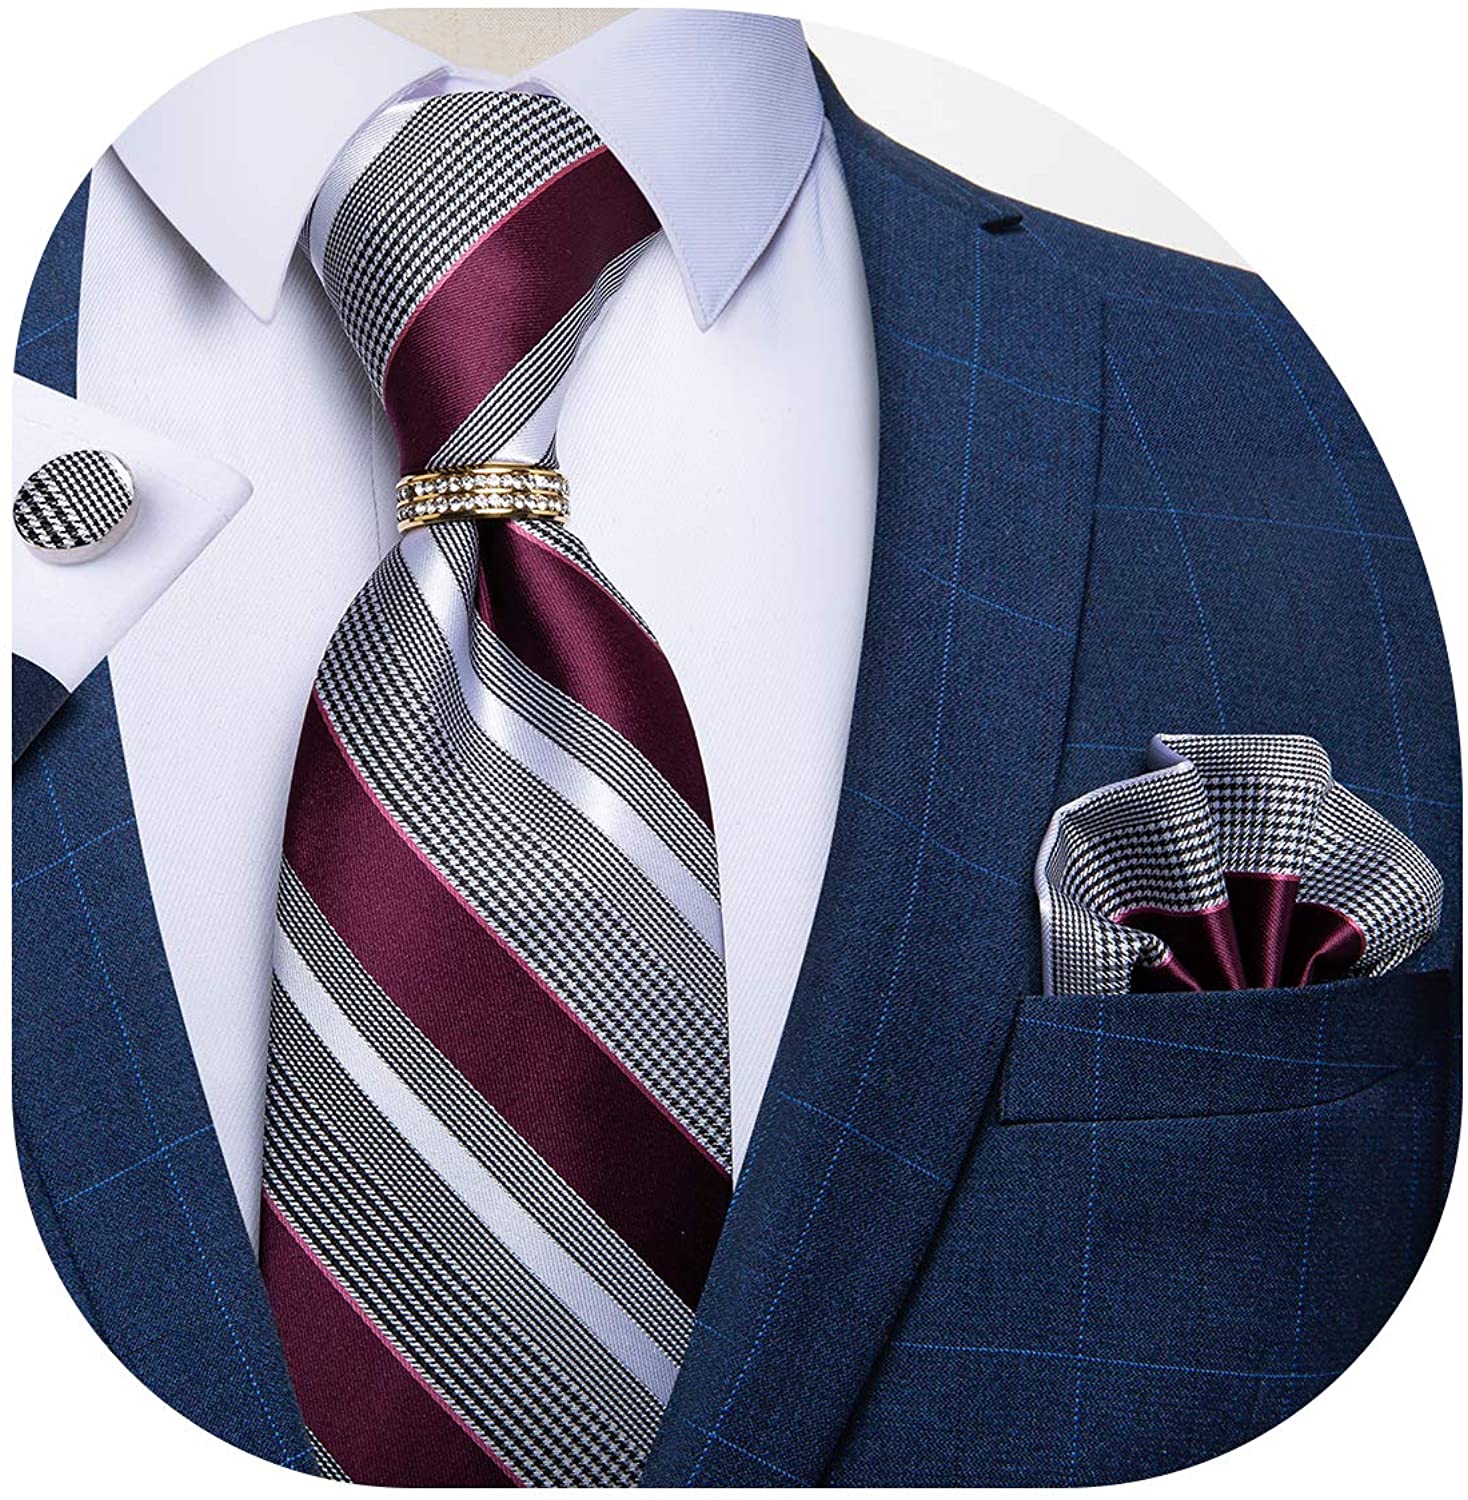 Details about   DiBanGu Mens Formal Solid Tie and Gold Tie Ring Set Silk Pocket Square Cufflinks 